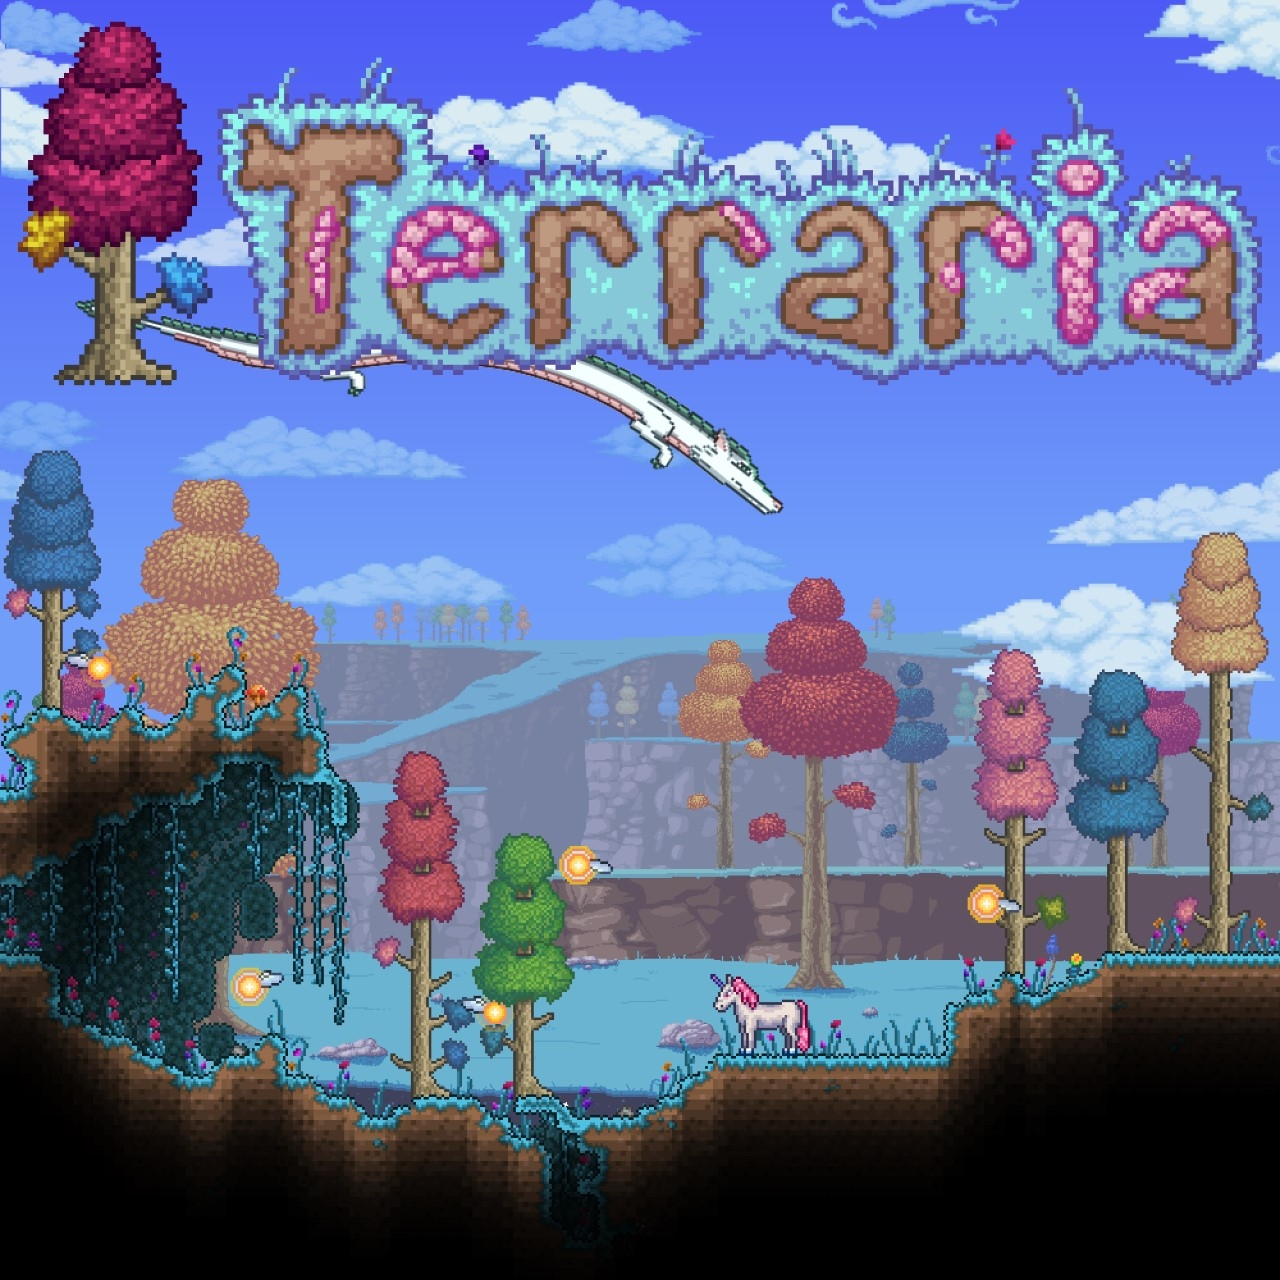 Terraria 1.4.4 Full Soundtrack (gamerip) (2022) MP3 - Download Terraria  1.4.4 Full Soundtrack (gamerip) (2022) Soundtracks for FREE!